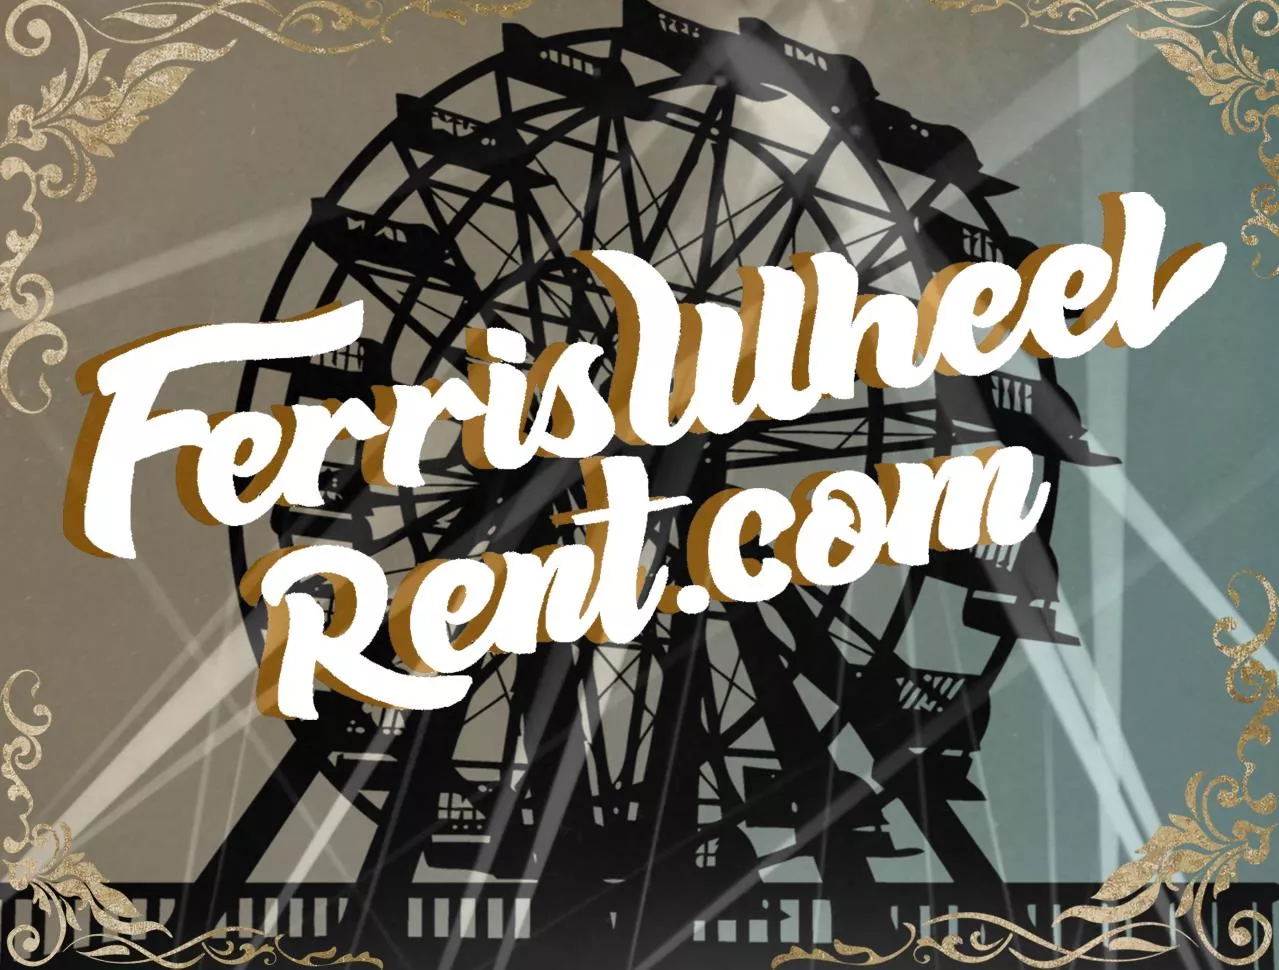 Ferris Wheel Rental Fun